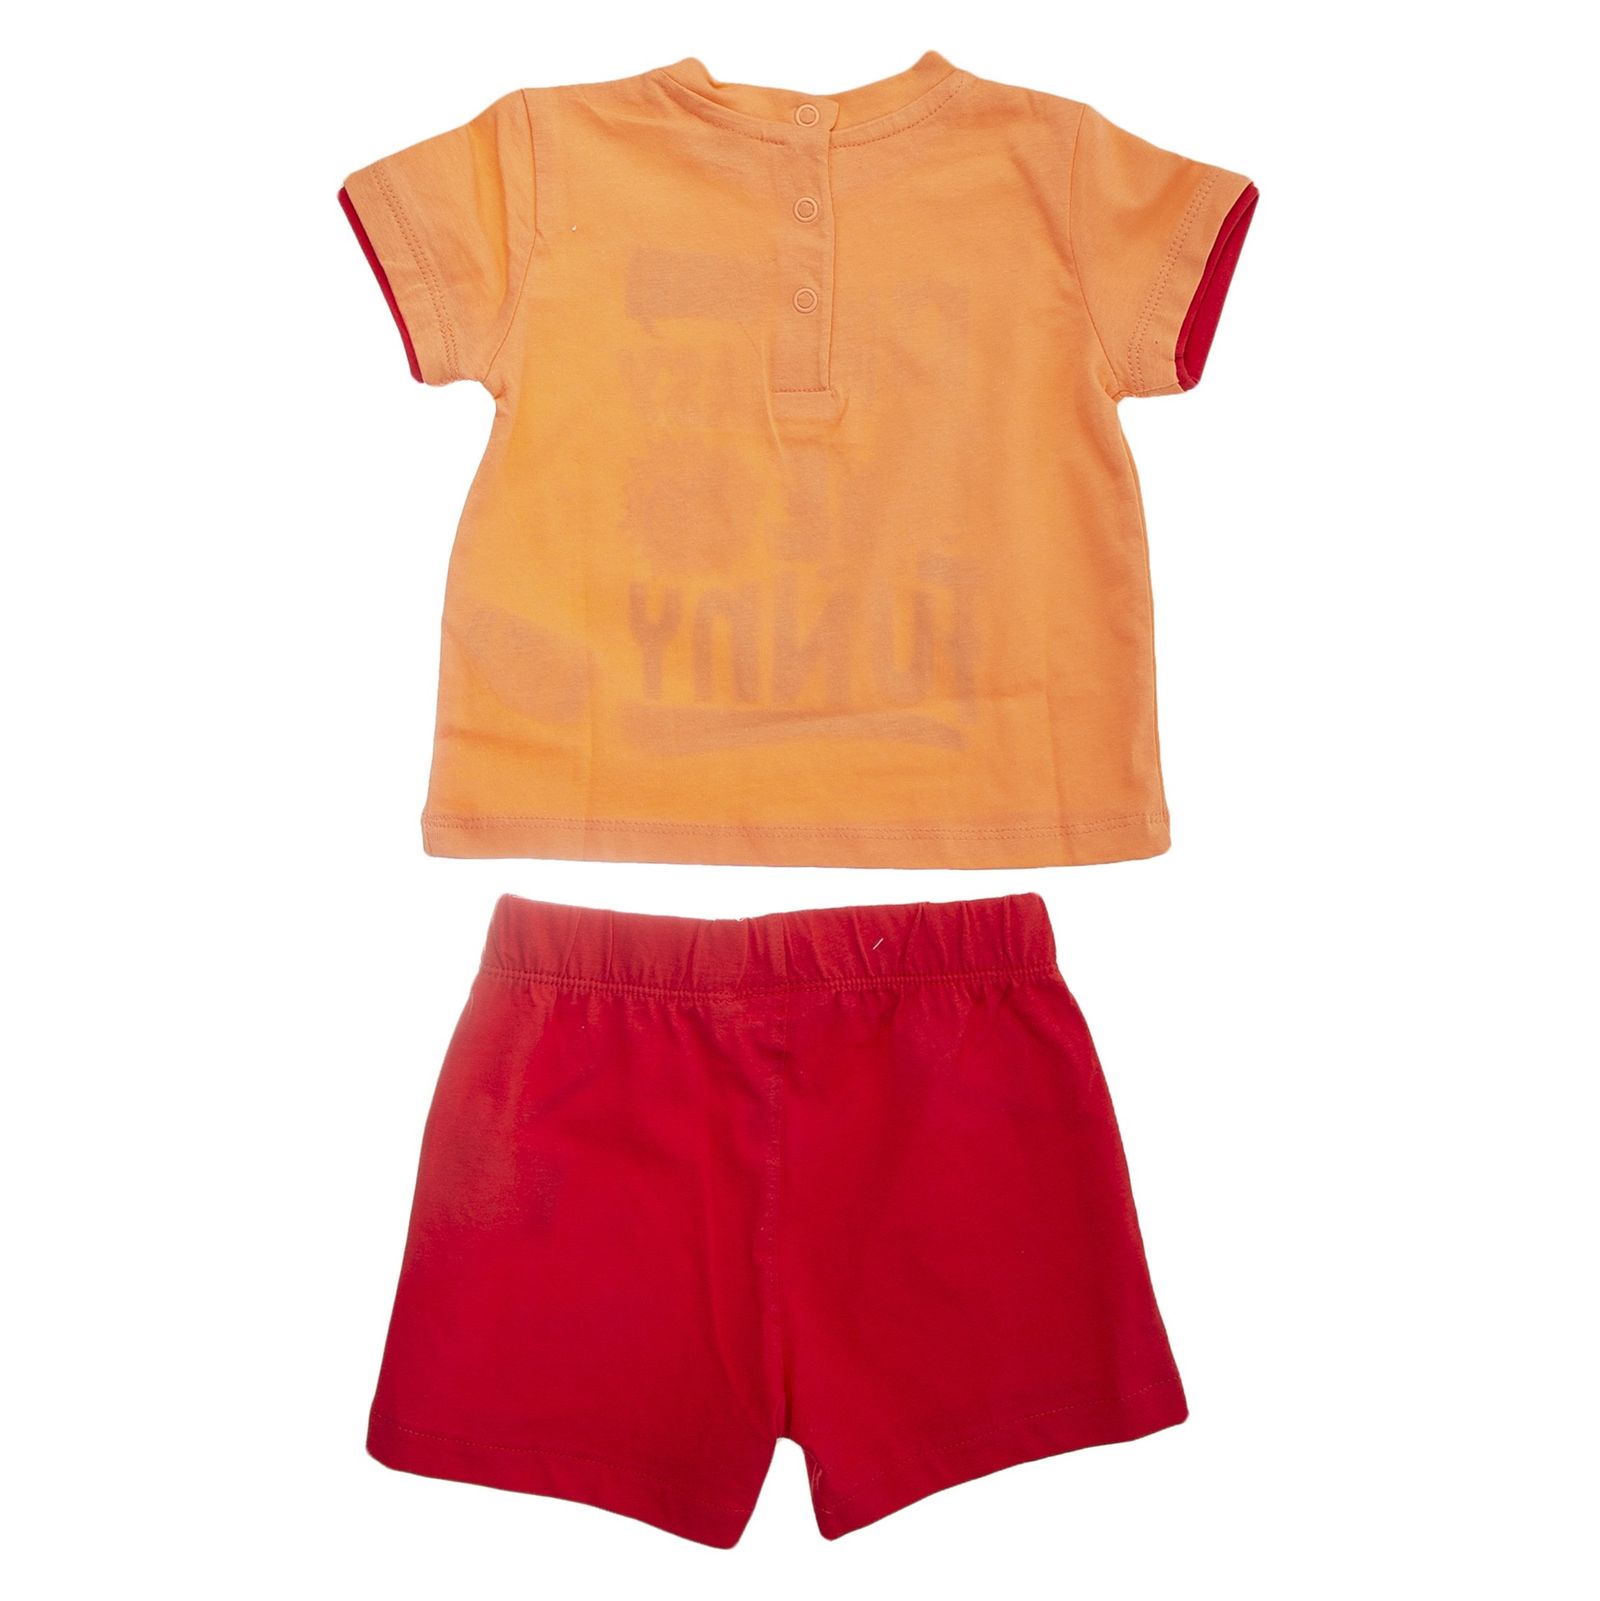 تی شرت و شلوارک نخی نوزادی پسرانه - بلوکیدز - نارنجي/قرمز - 3